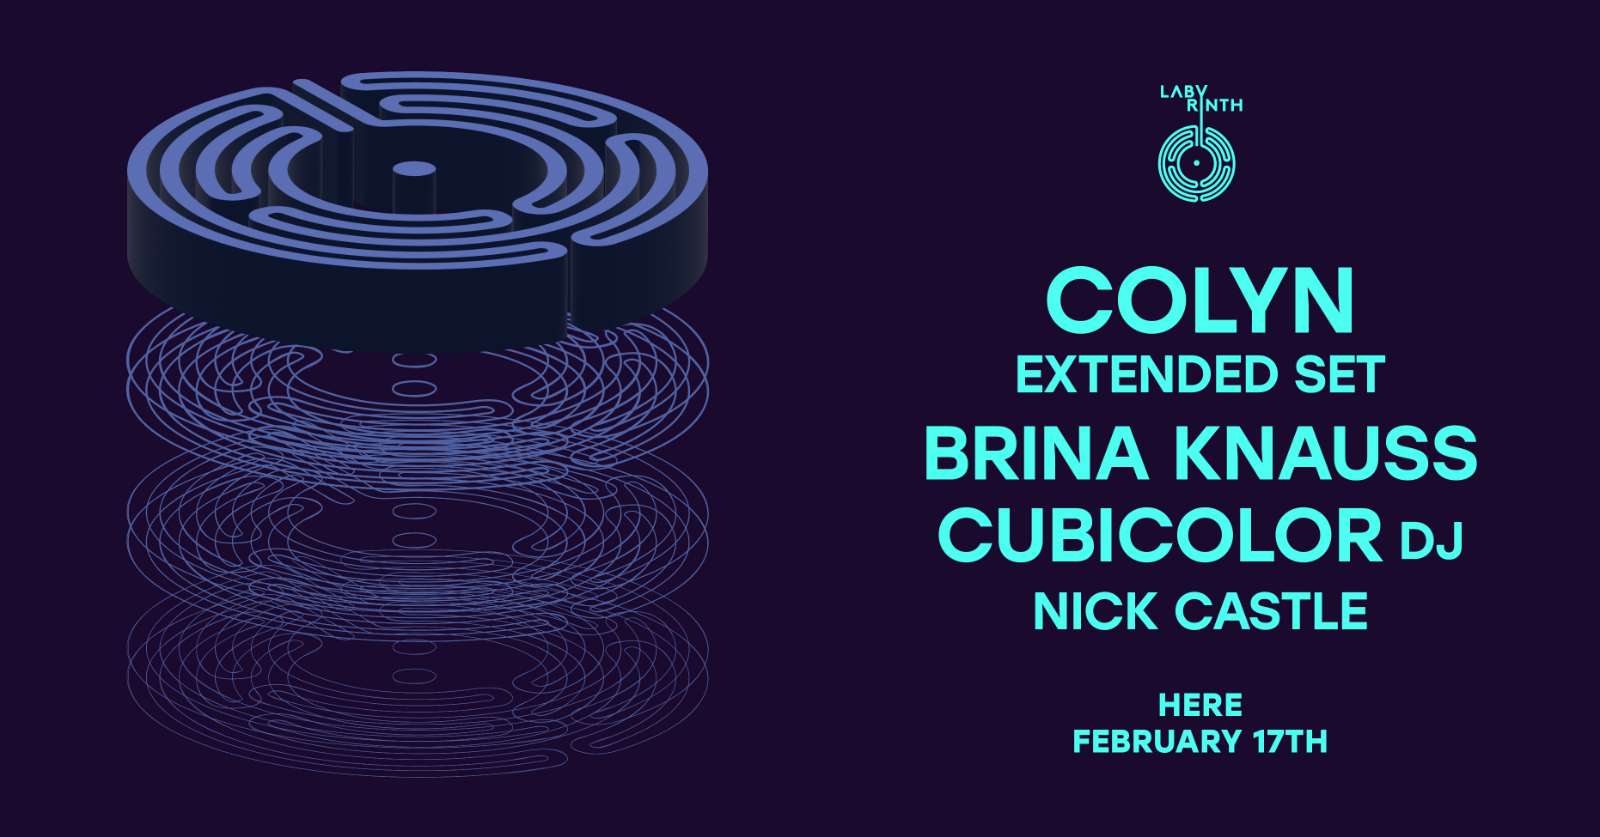 Colyn extended set, Cubicolor & Brina Knauss